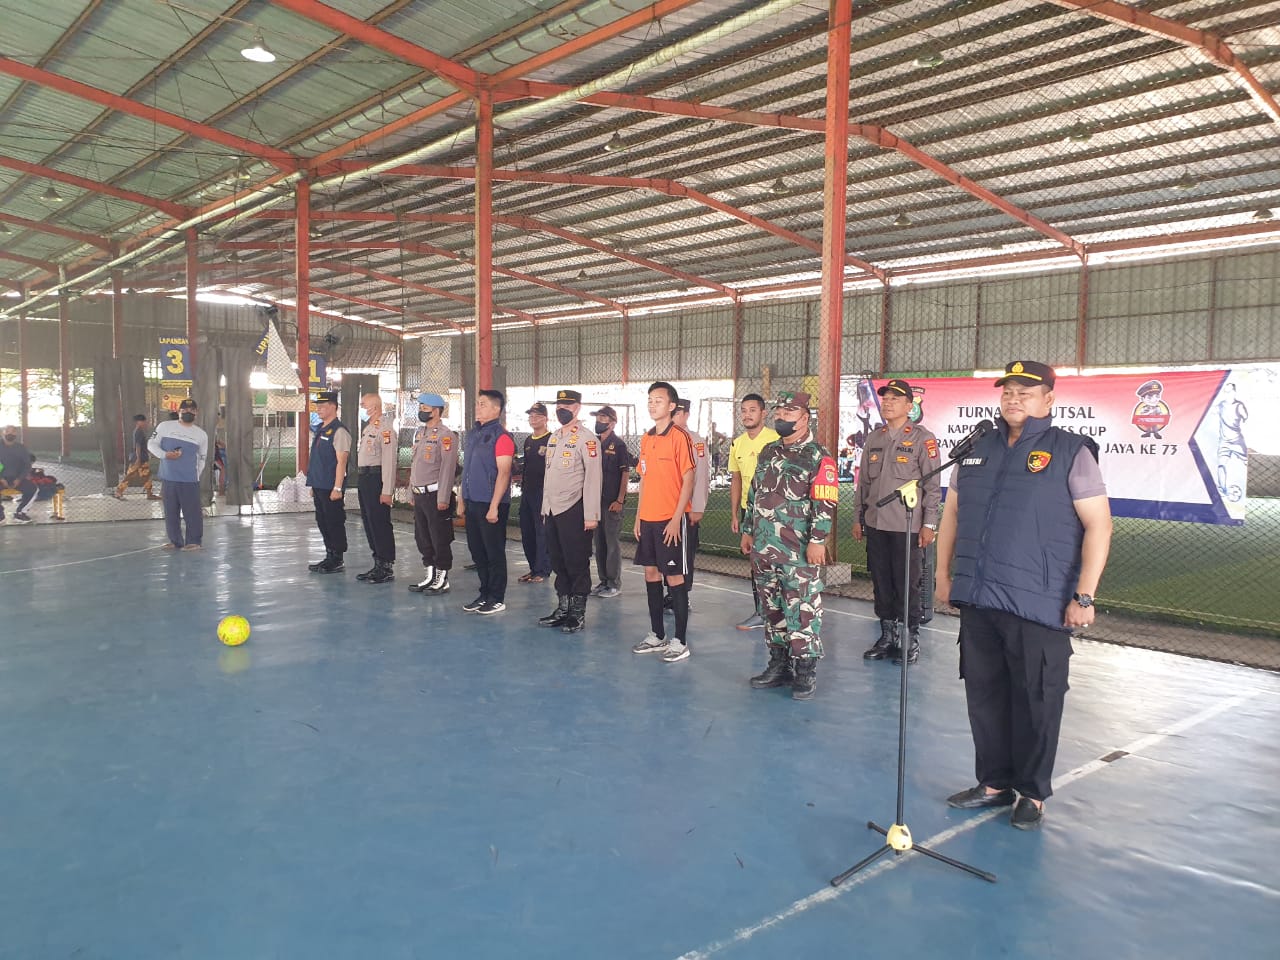 Turnamen Futsal Polisi di Jakarta Barat 'Kejar Prestasi, Tolak Tawuran'